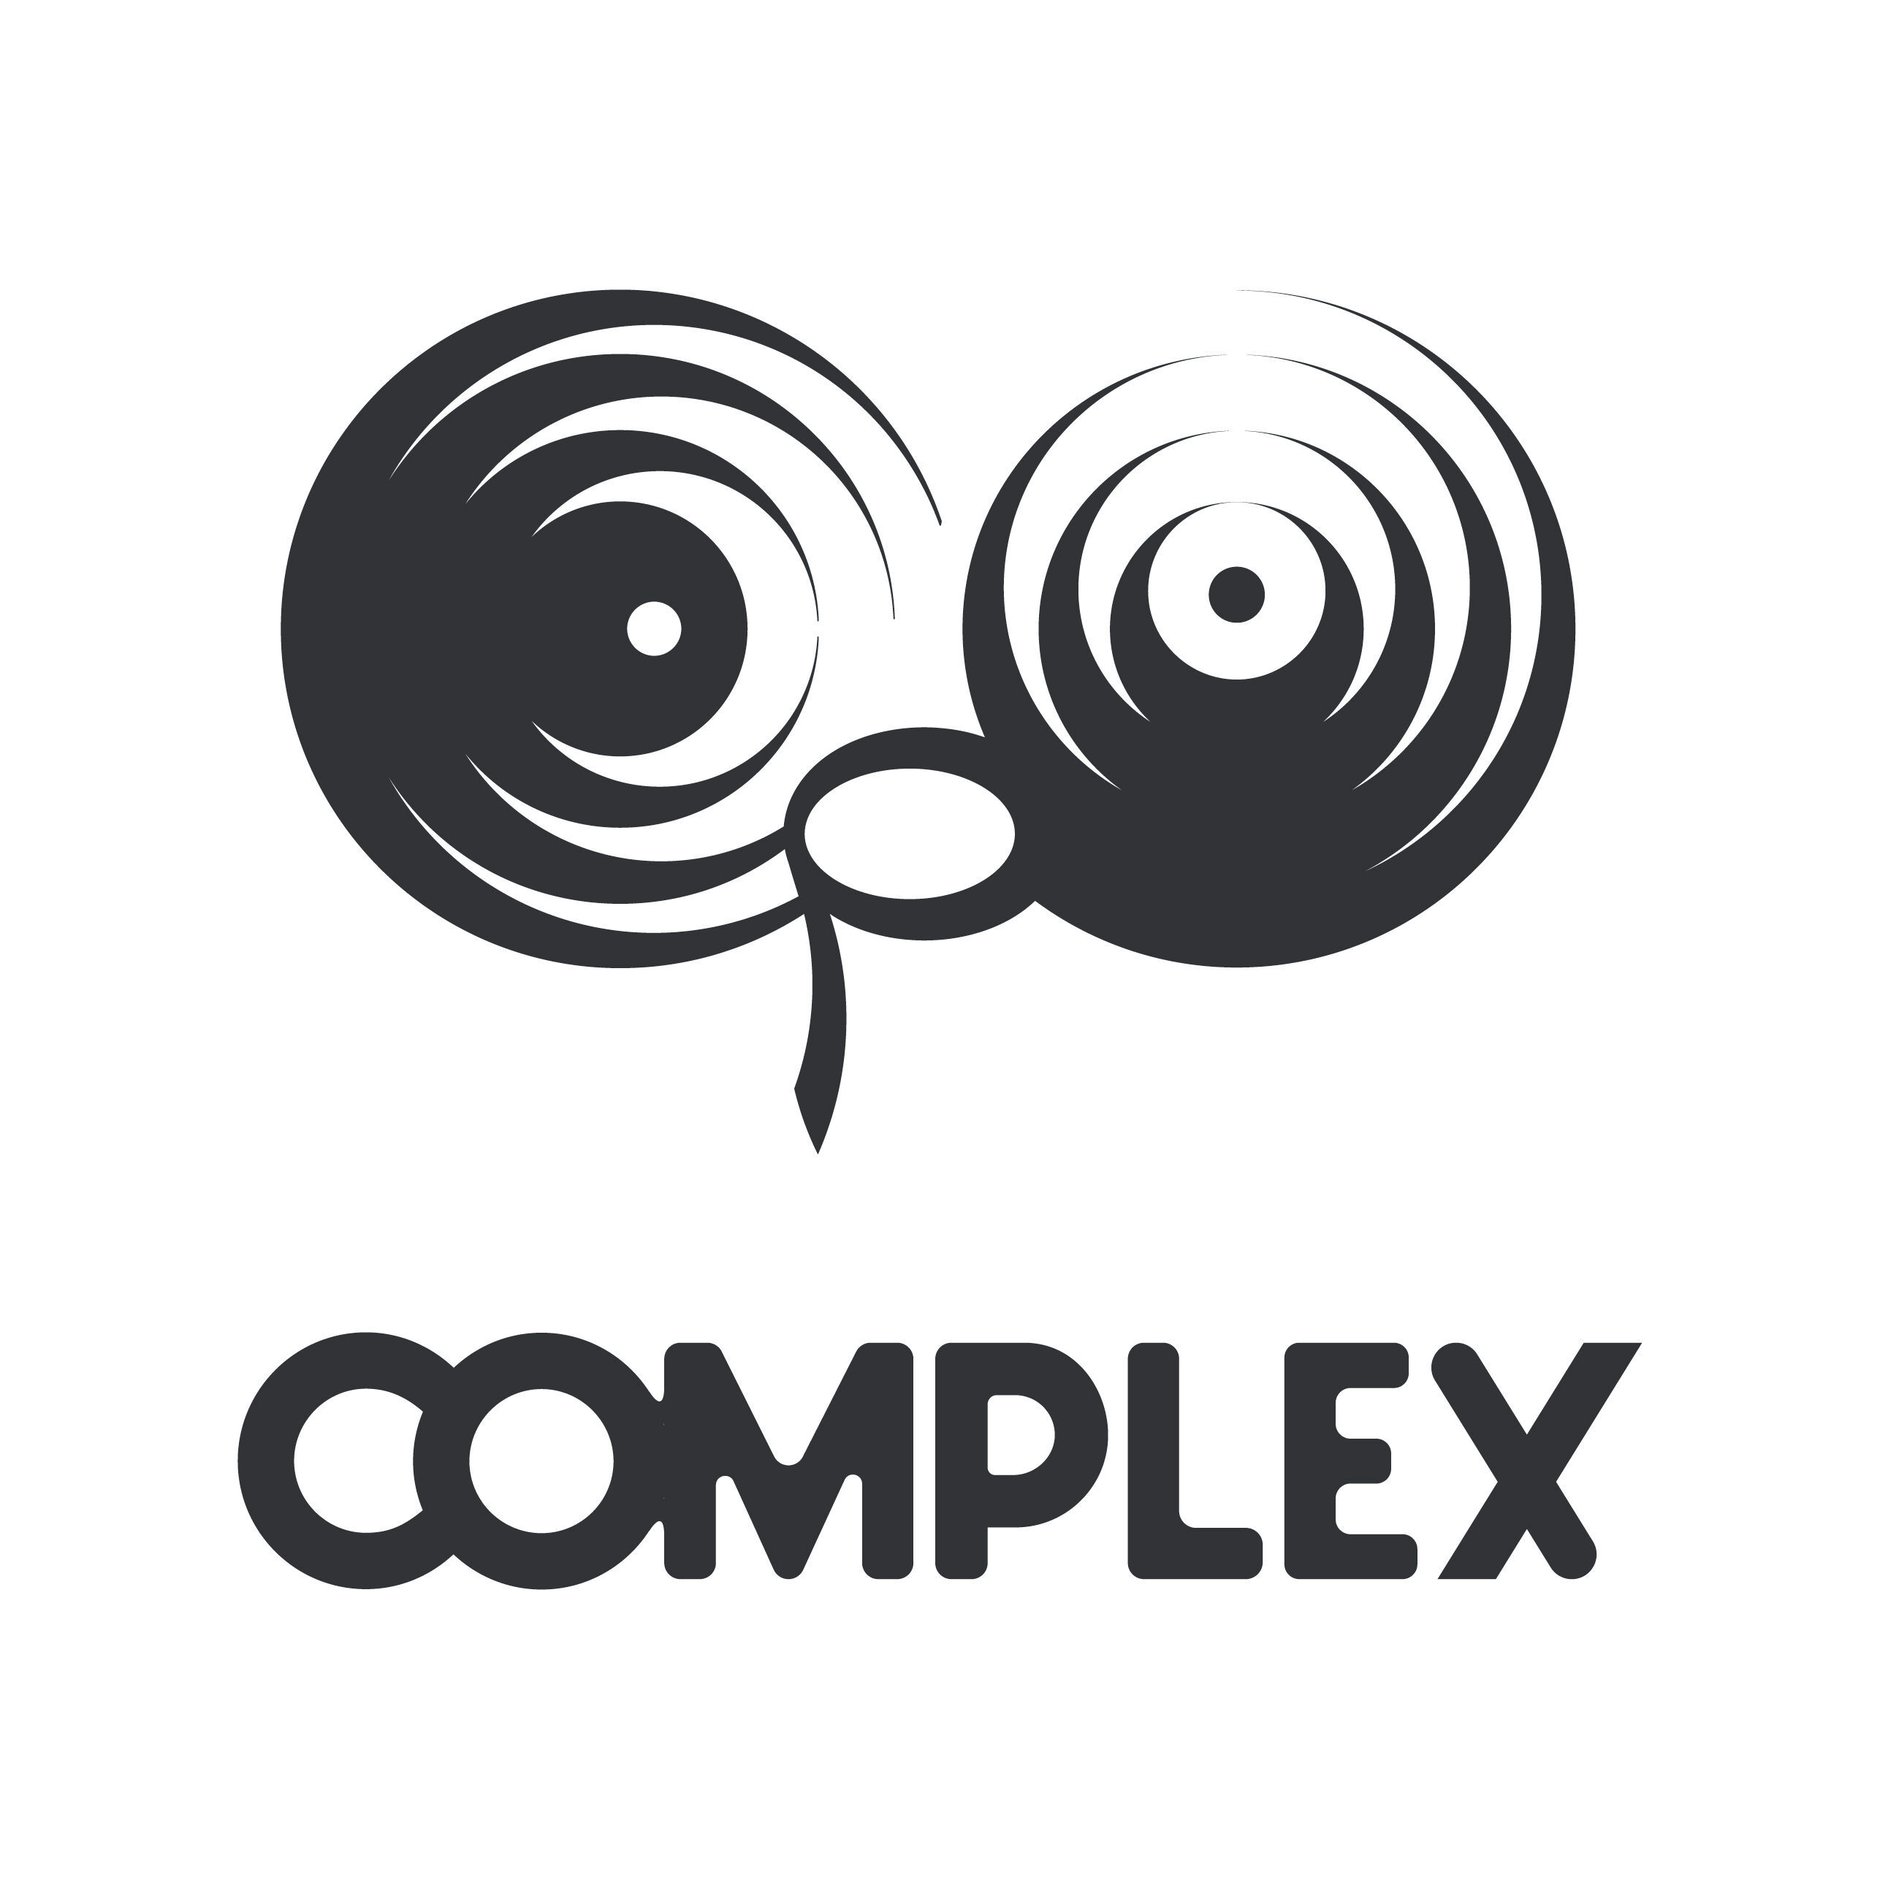 COMPLEX